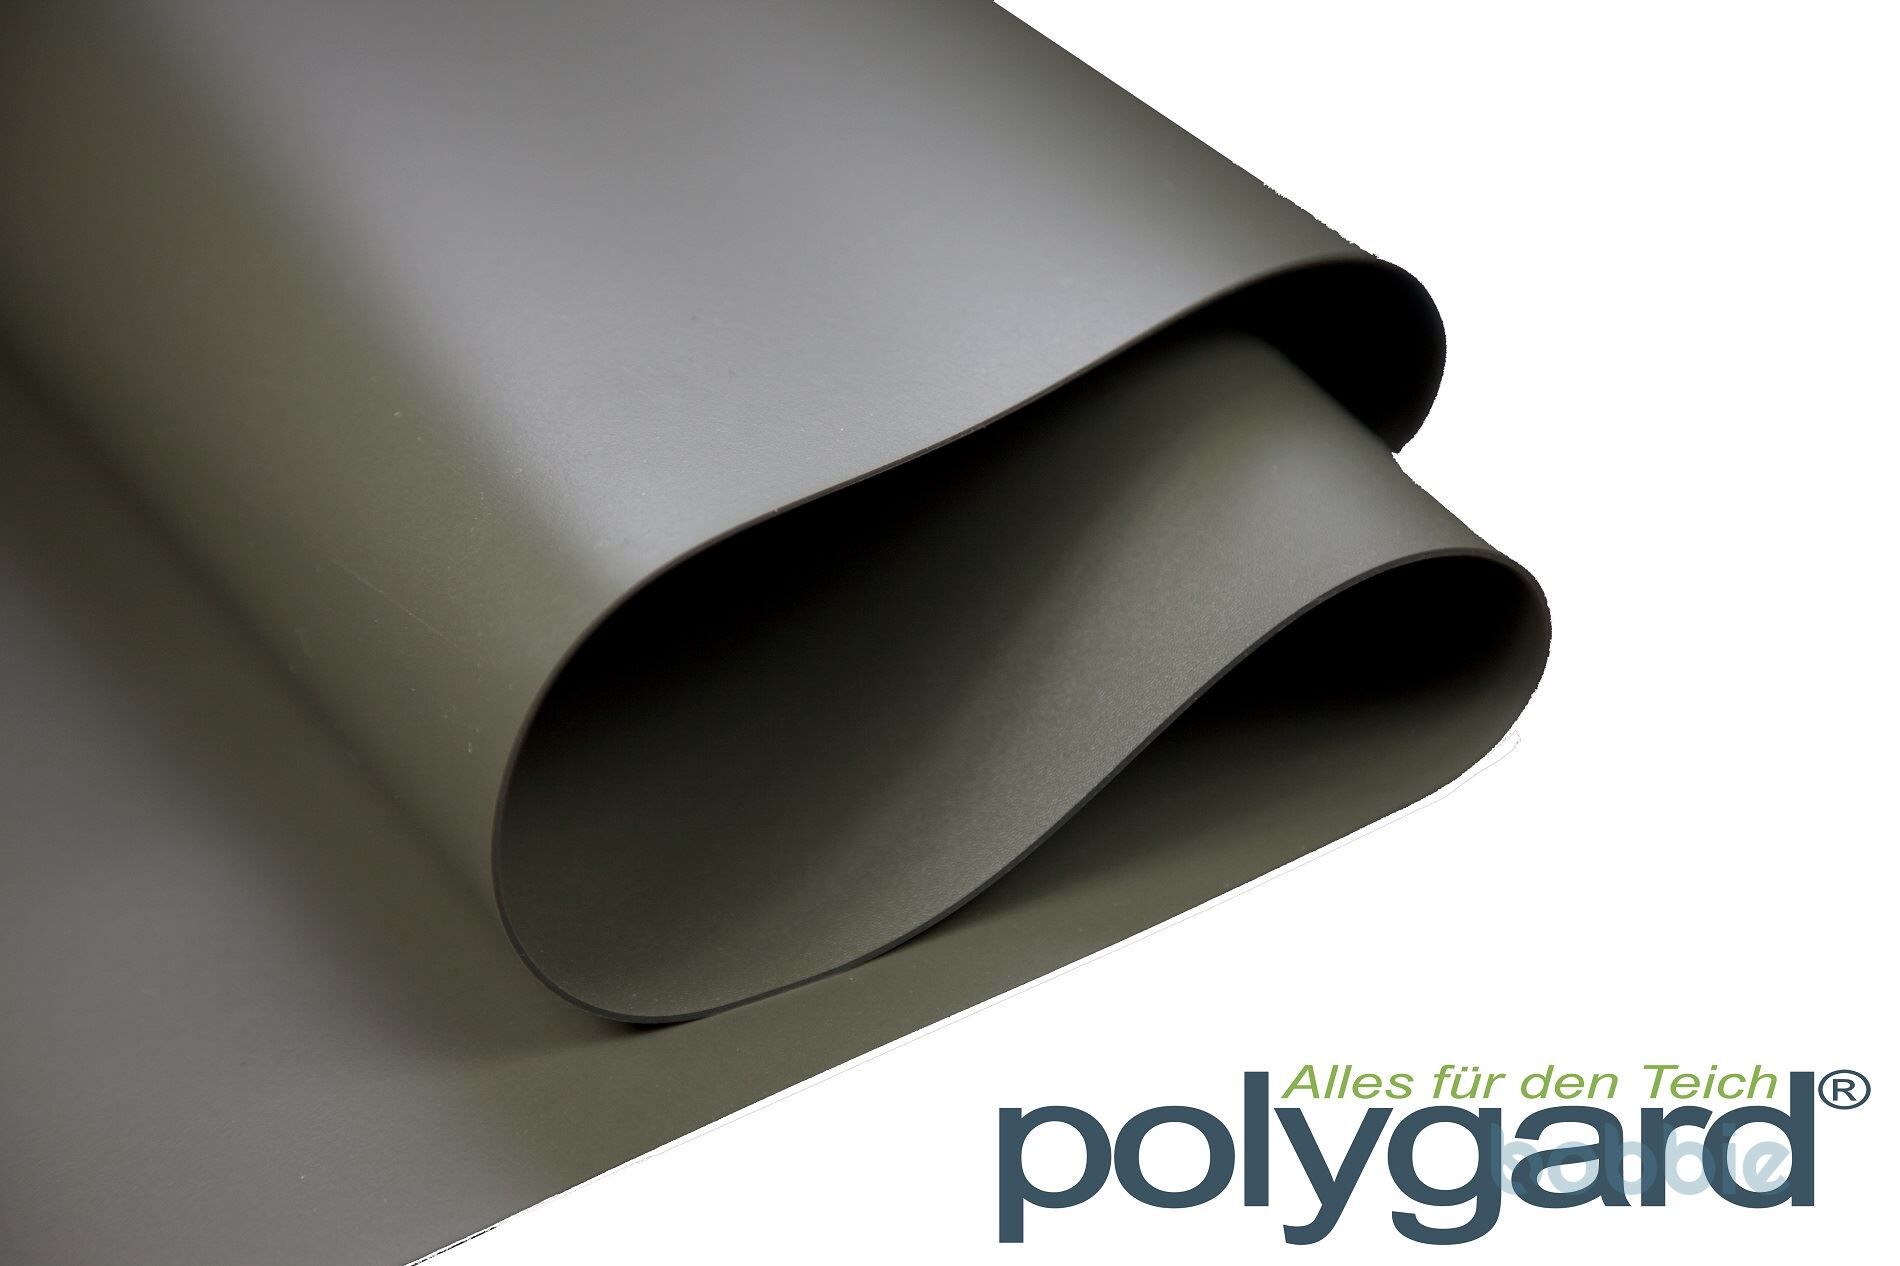 Polygard PVC Teichfolie 1mm oliv-grün PrePack - 6,0 x 3,0 m